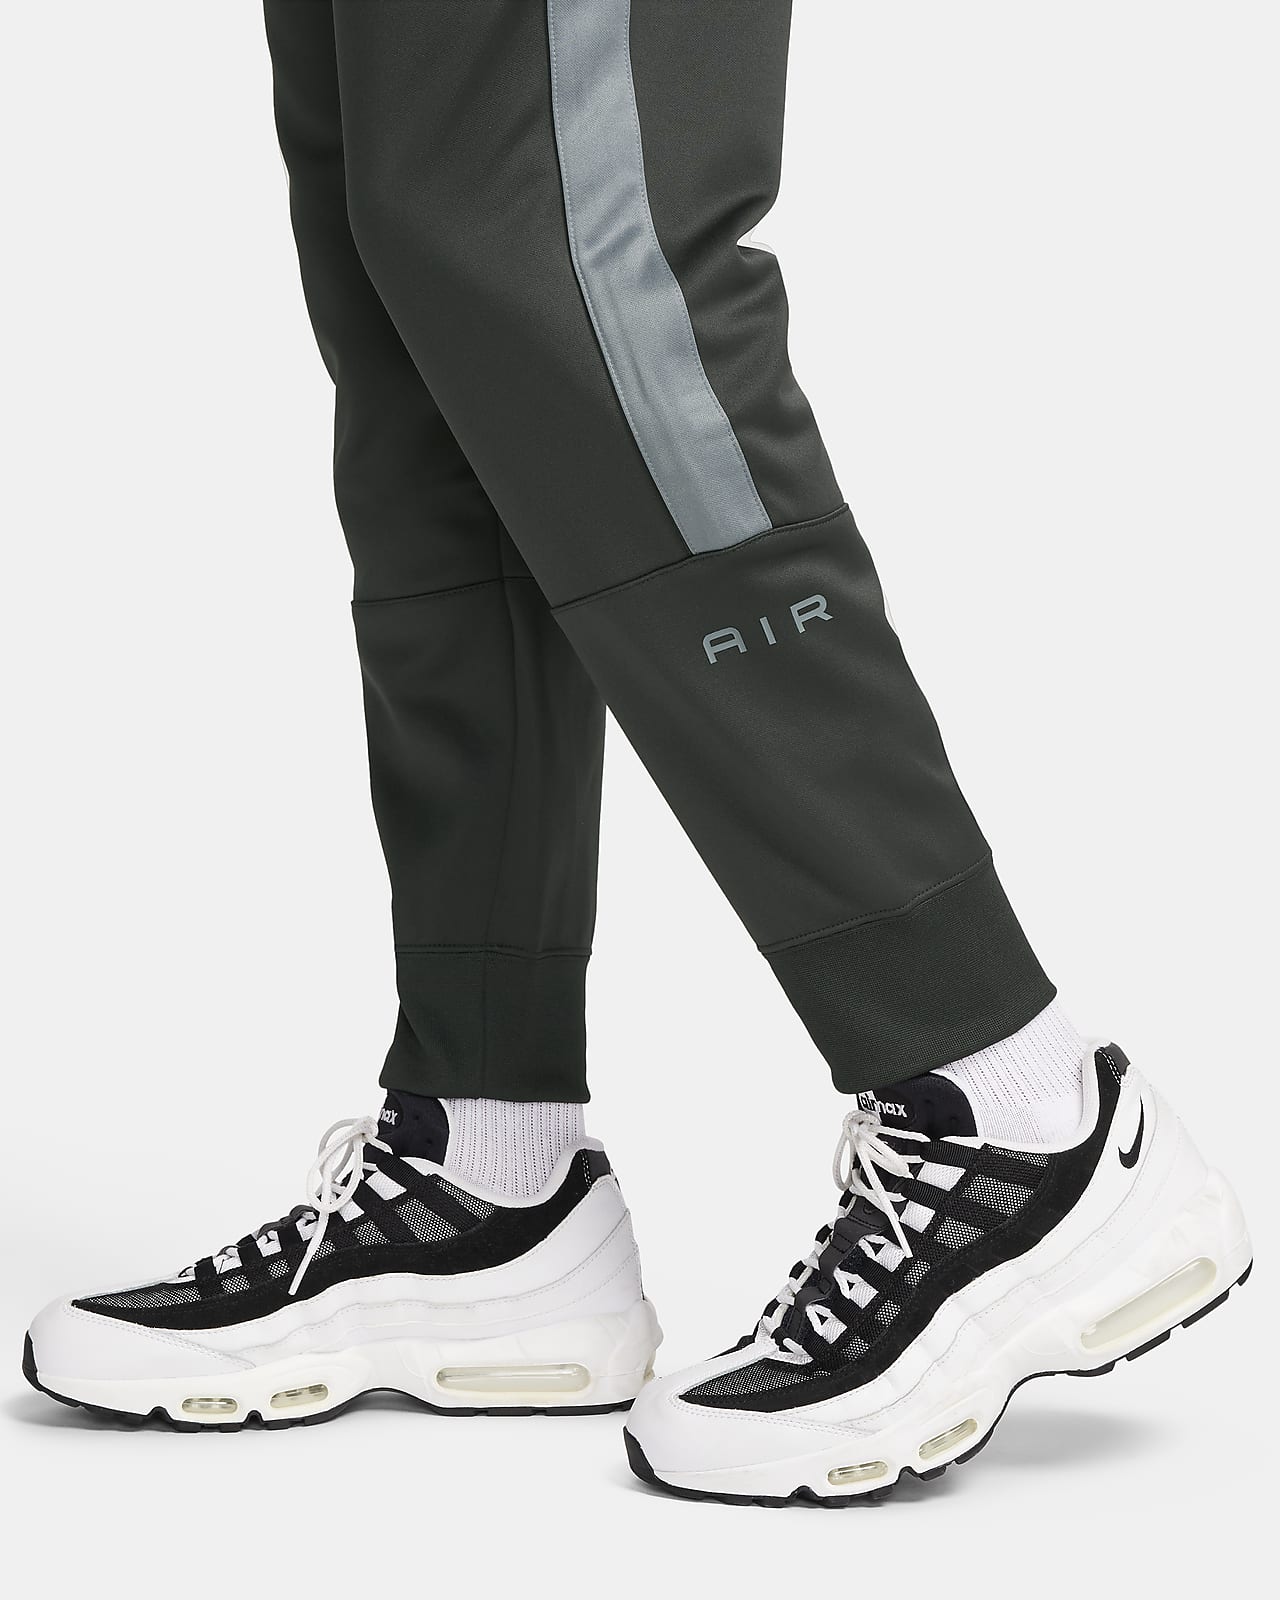 Buy: Sweatpants NIKE W Nk One Df Mr Tght Aop from ELKOR